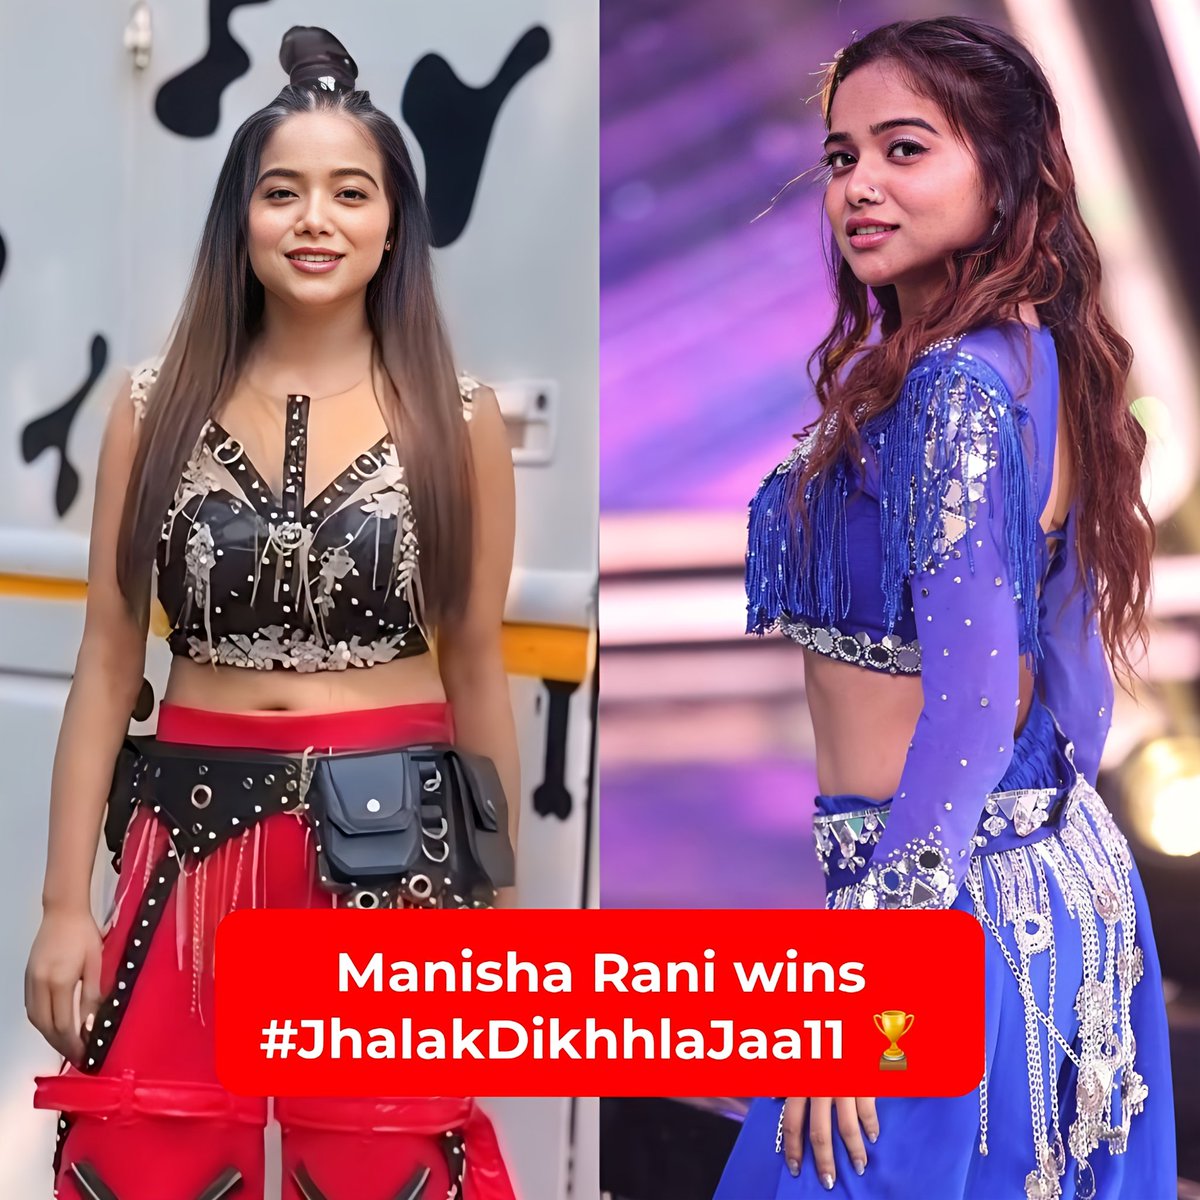 As per reports, #ManishaRani is the winner of '#JhalakDikhhlaJaa11'